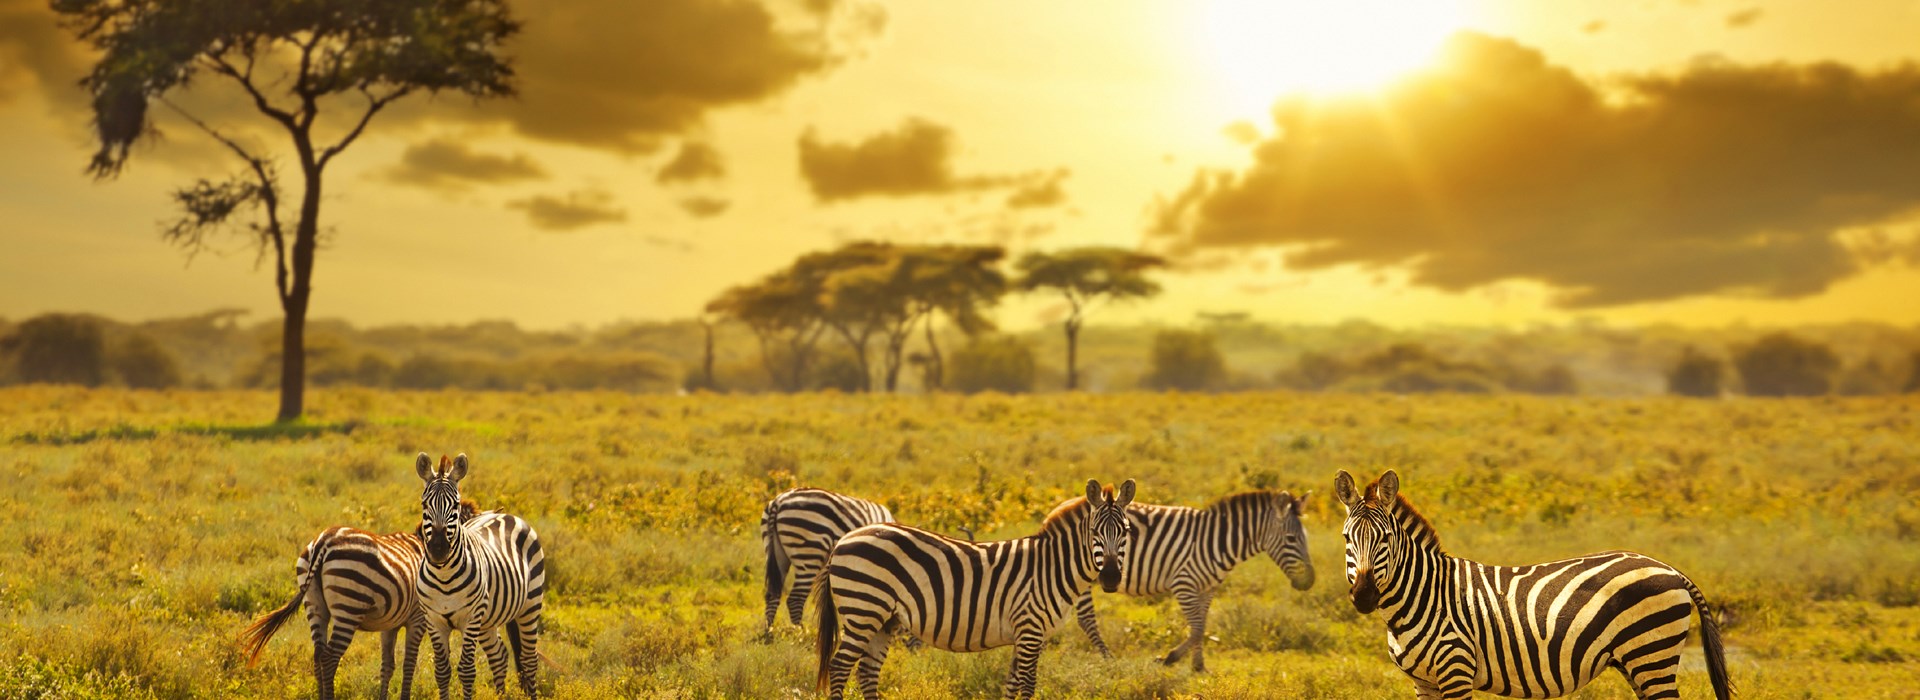 safari kenya entre solos